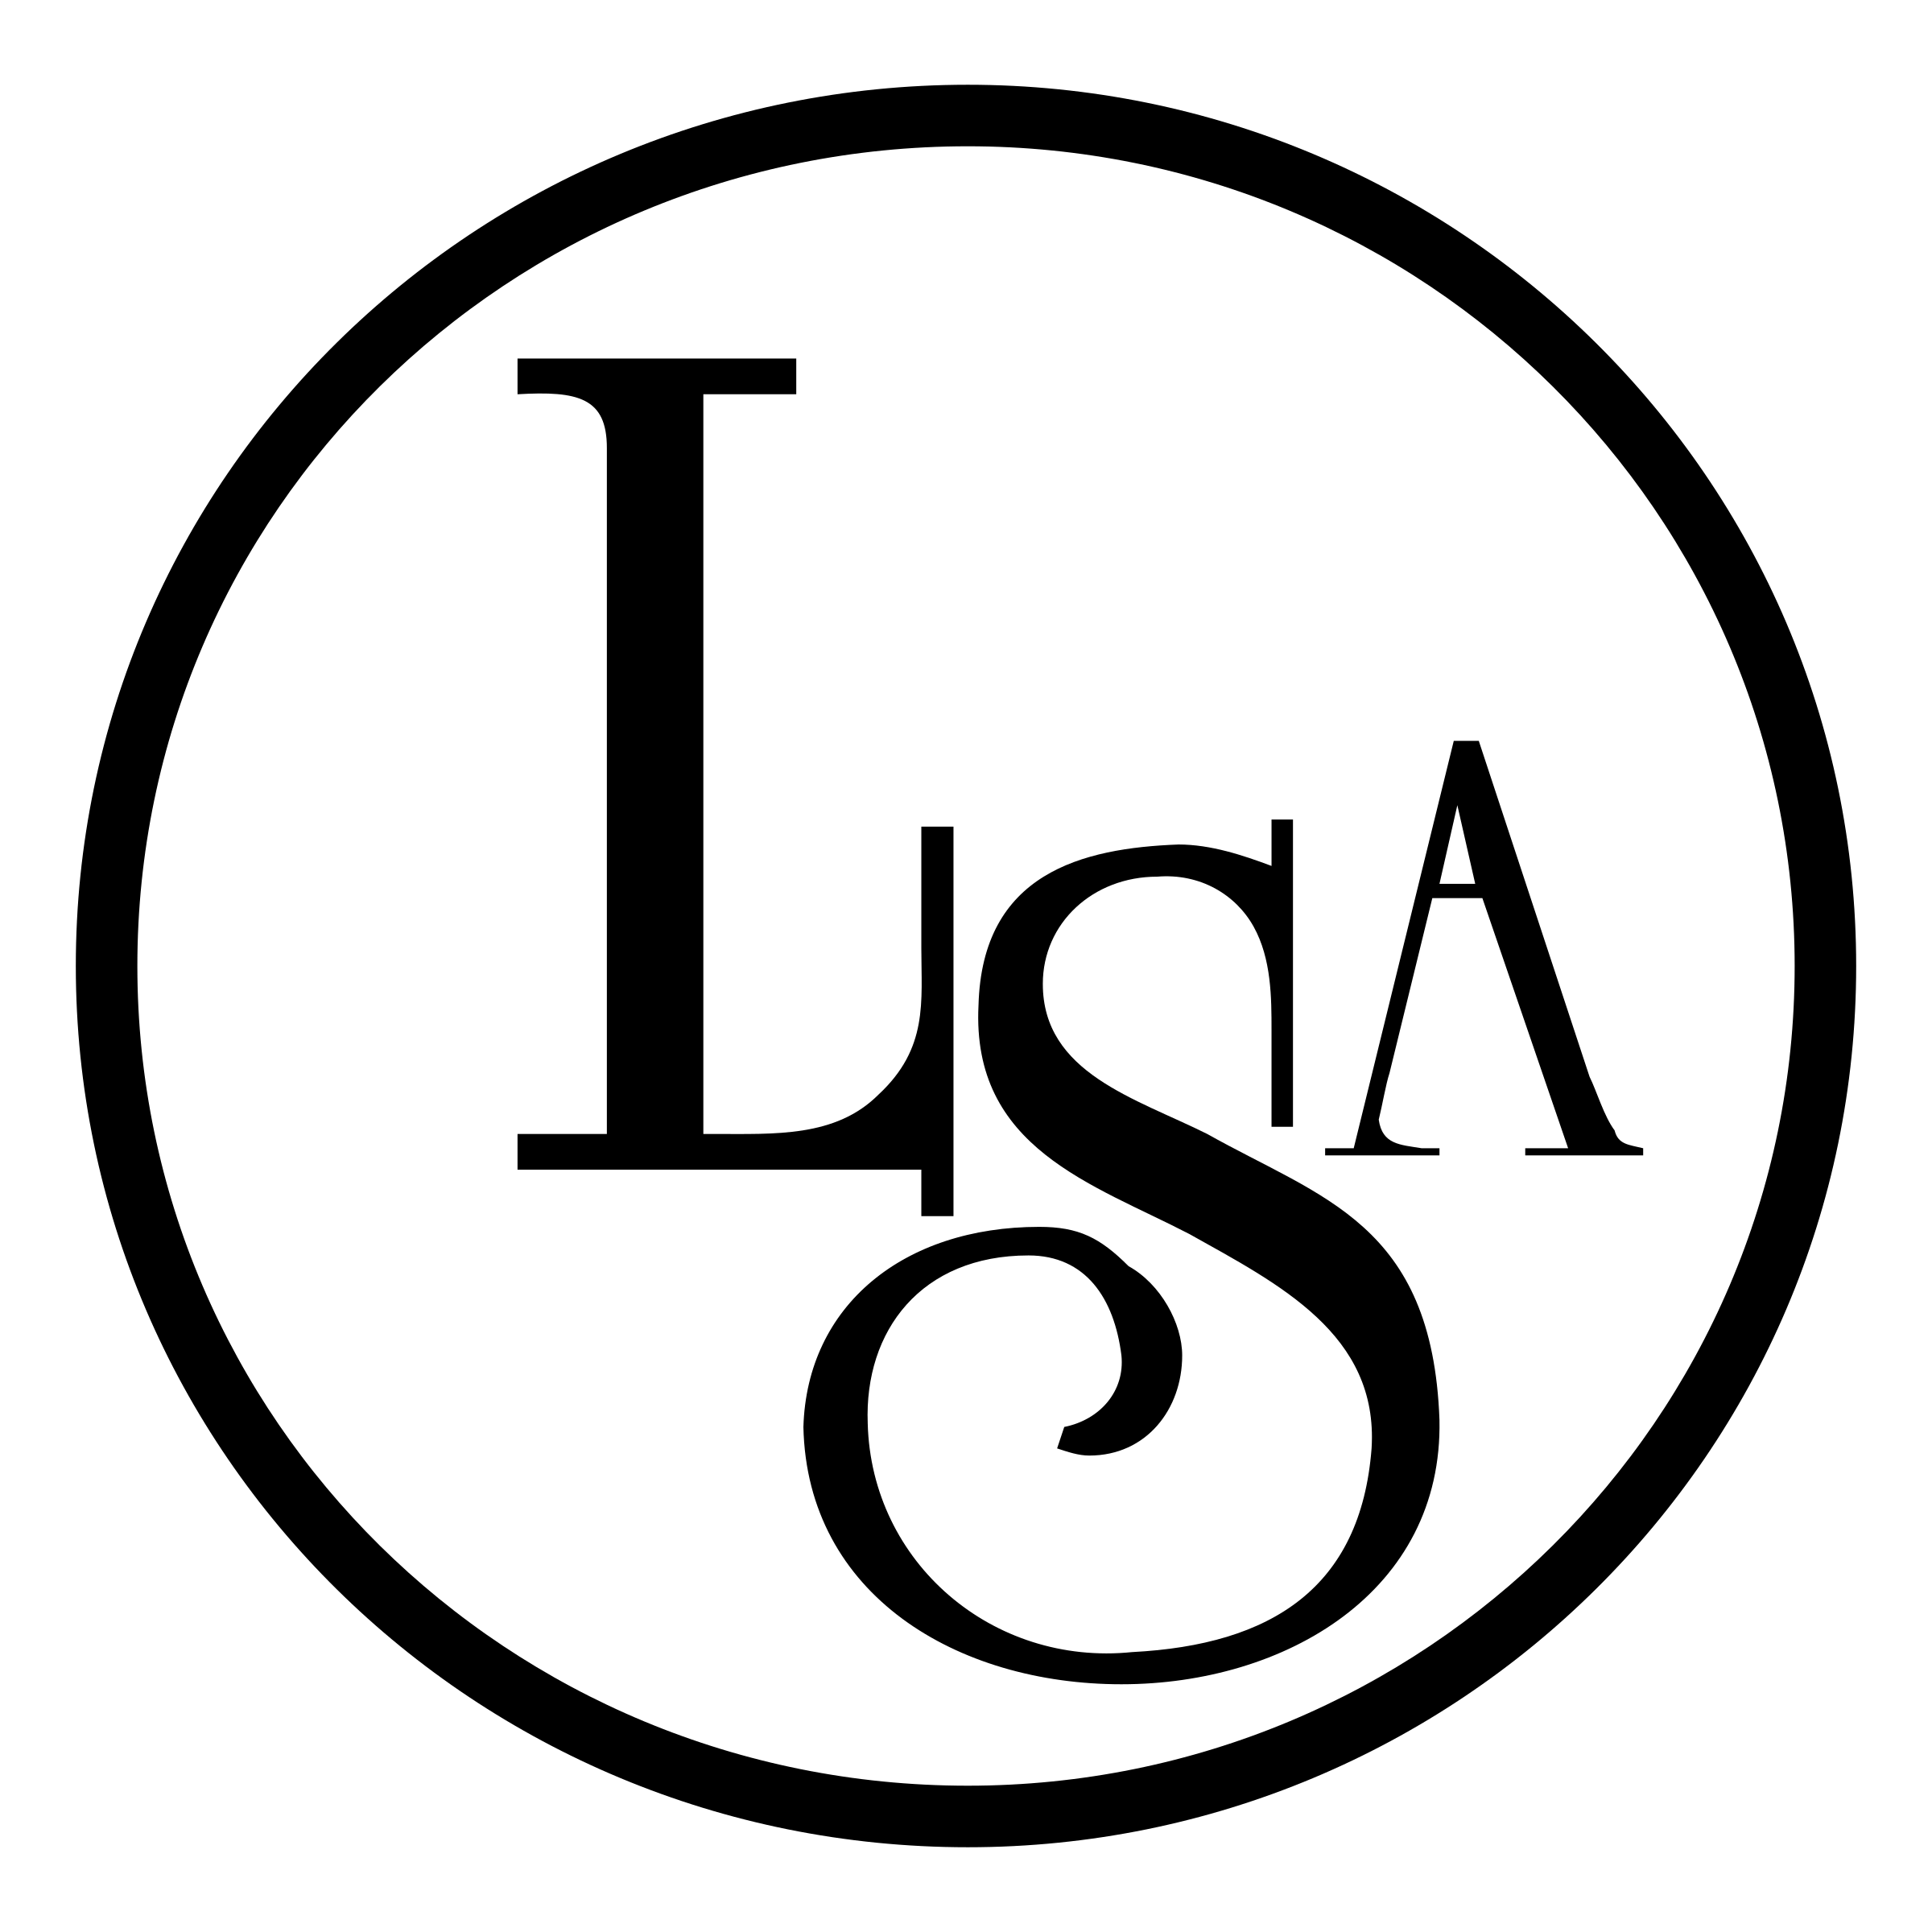 LSA Logo - LSA Logo PNG Transparent & SVG Vector - Freebie Supply